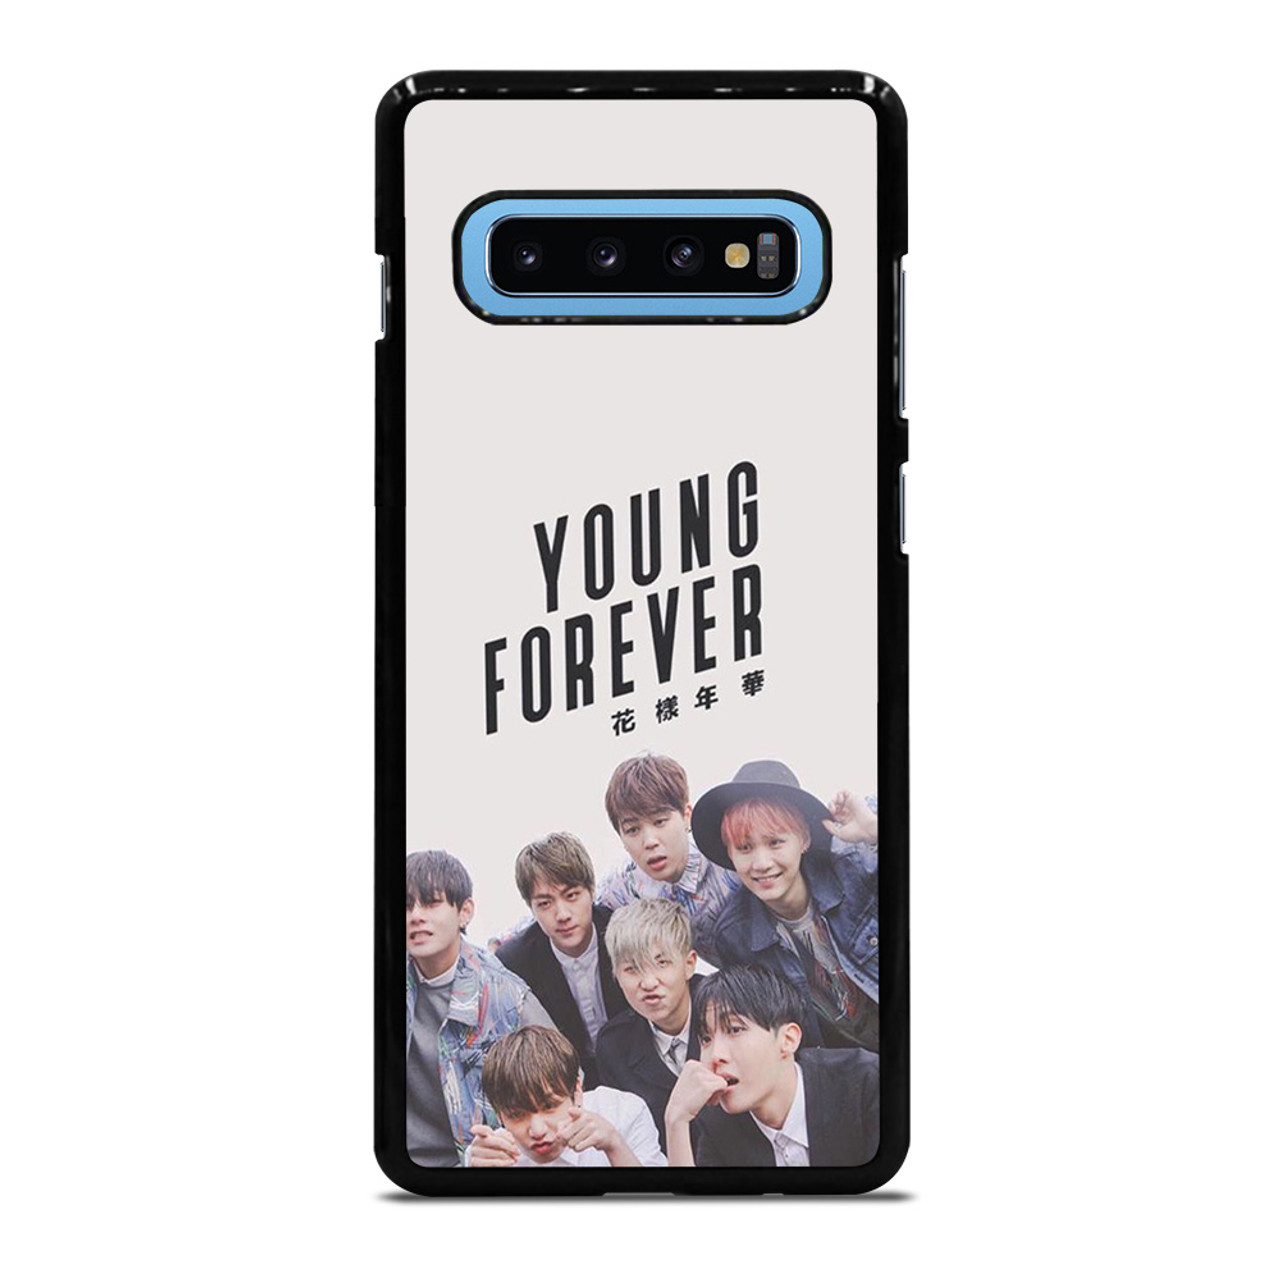 BTS BANGTAN BOYS Samsung Galaxy S10 Plus Case Cover